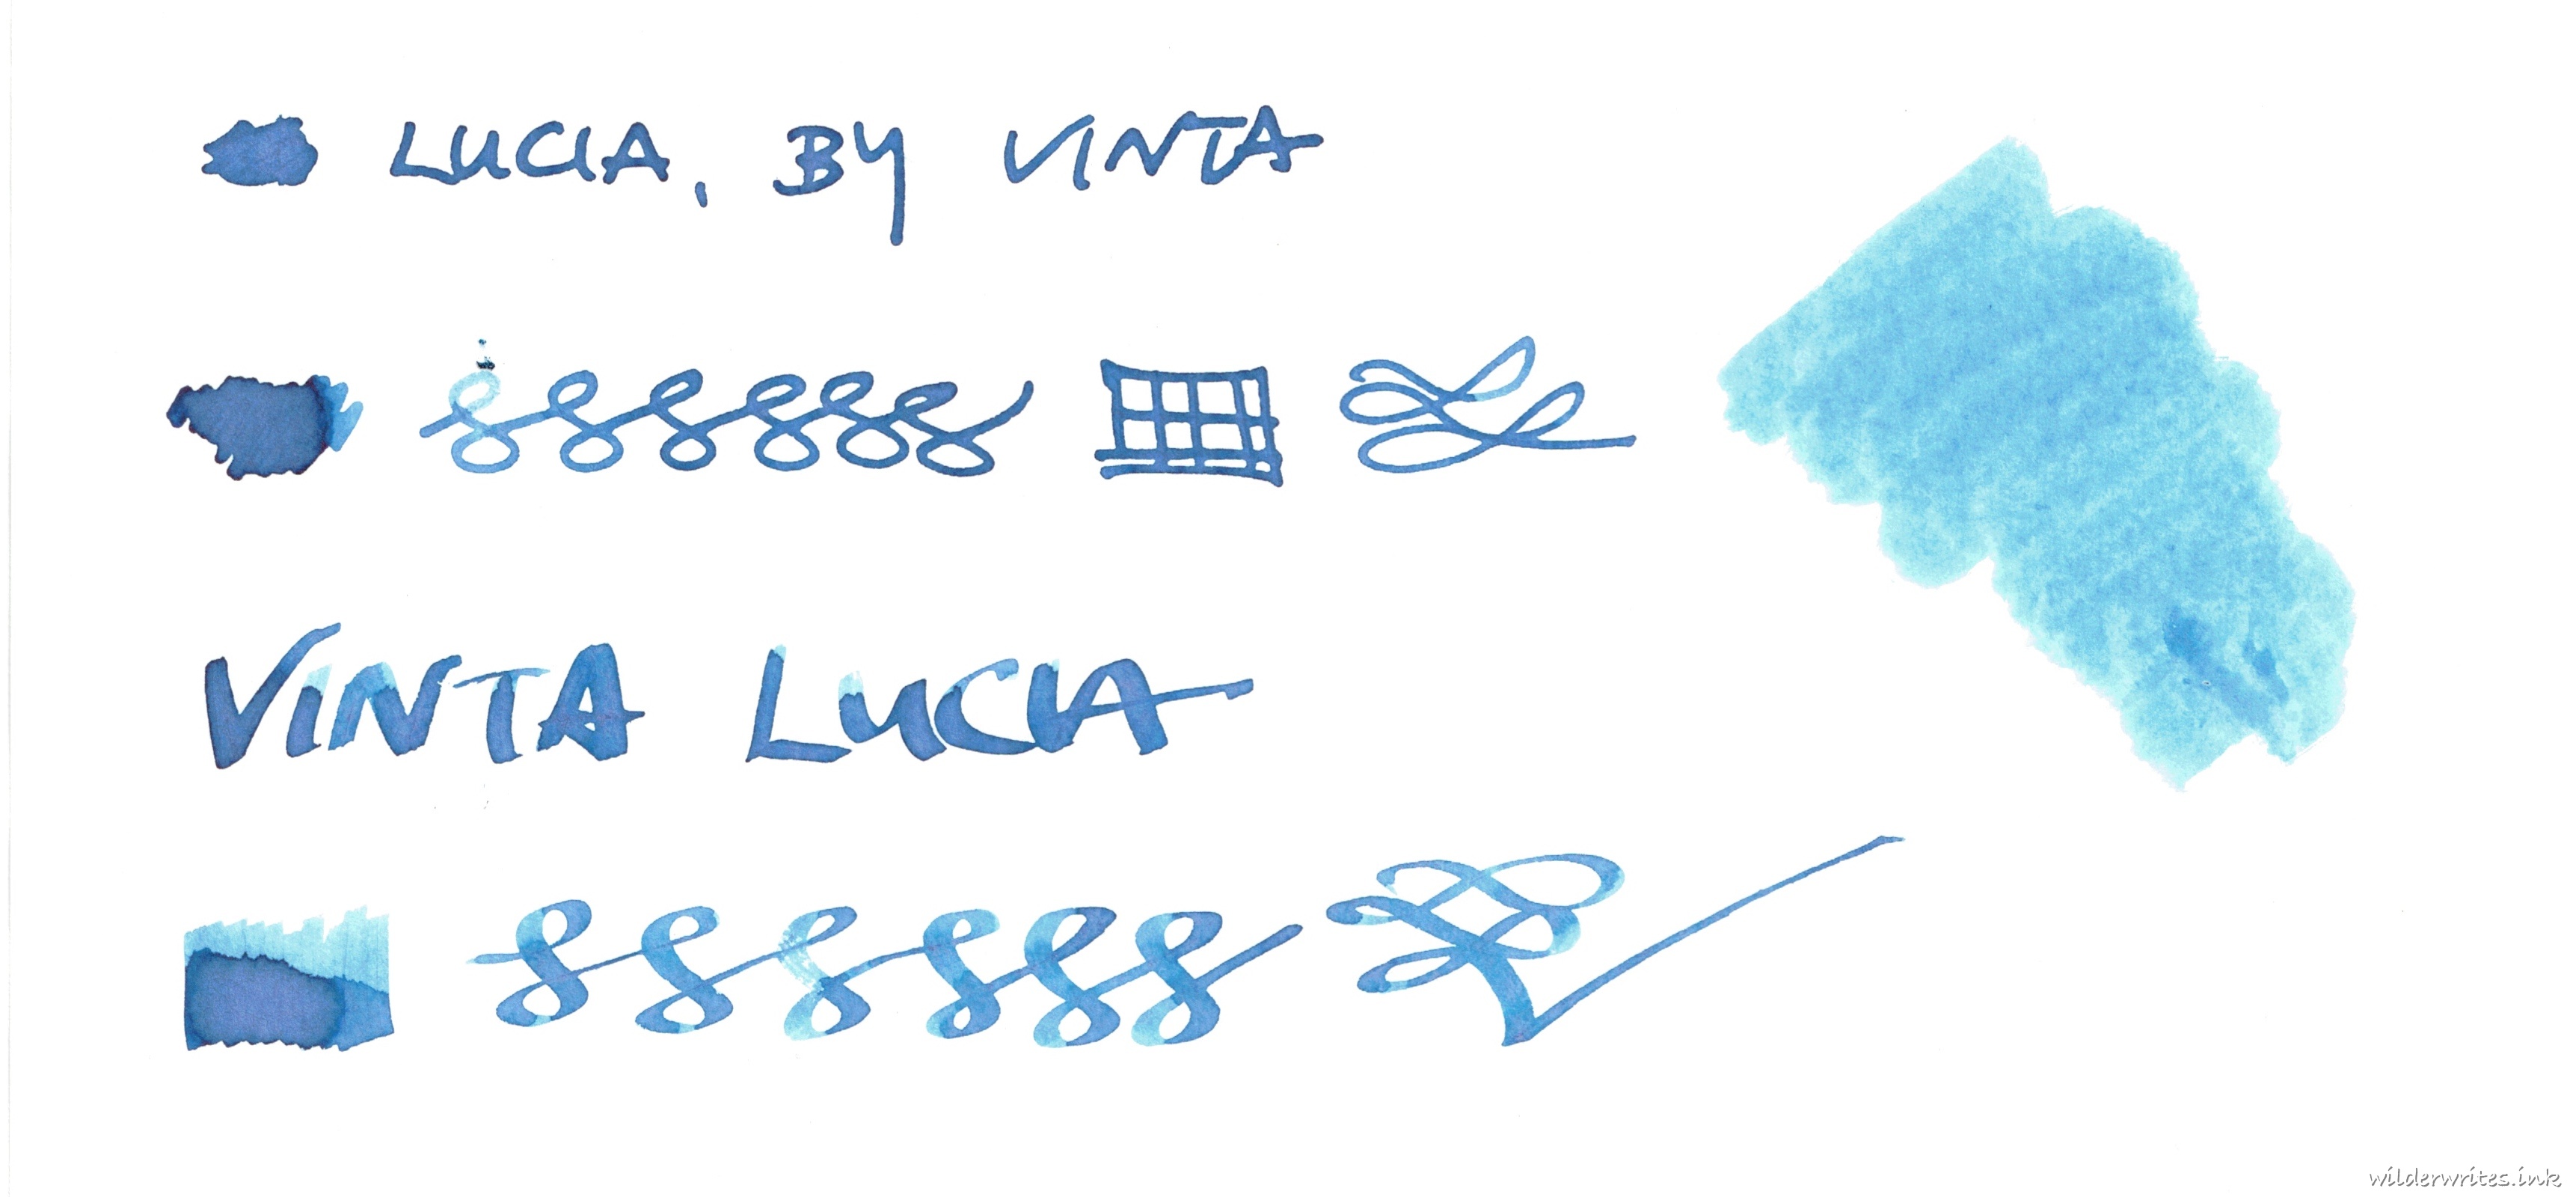 Vinta Lucia on Tomoe River (52gsm)